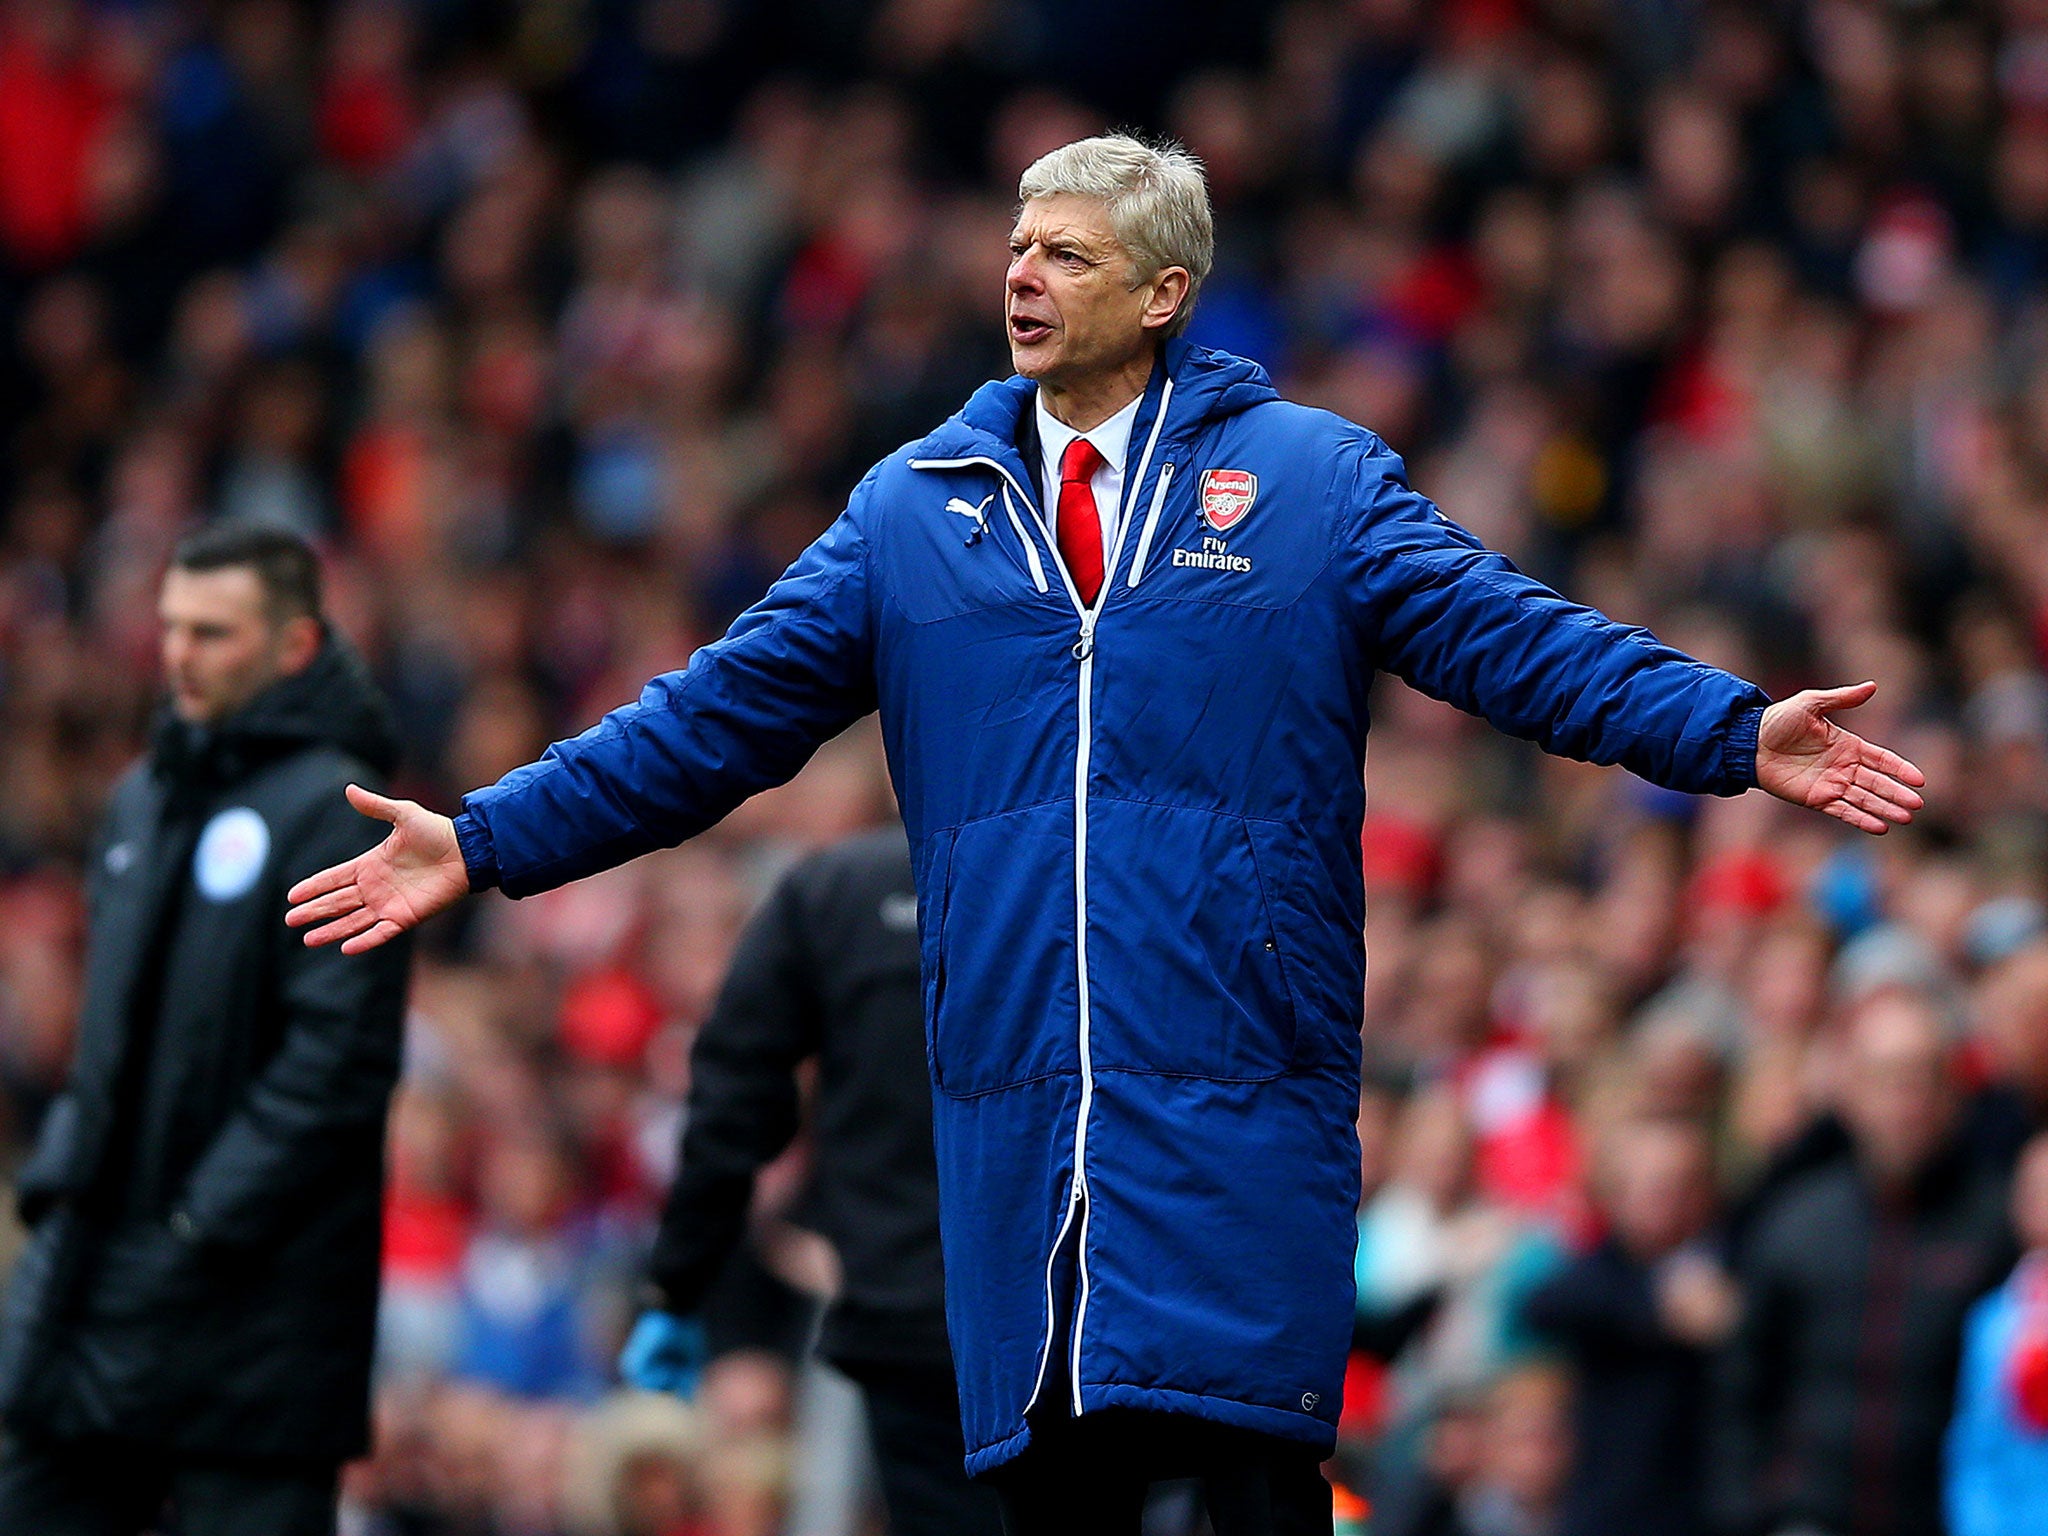 Arsenal manager Arsene Wenger reacts on the touchline